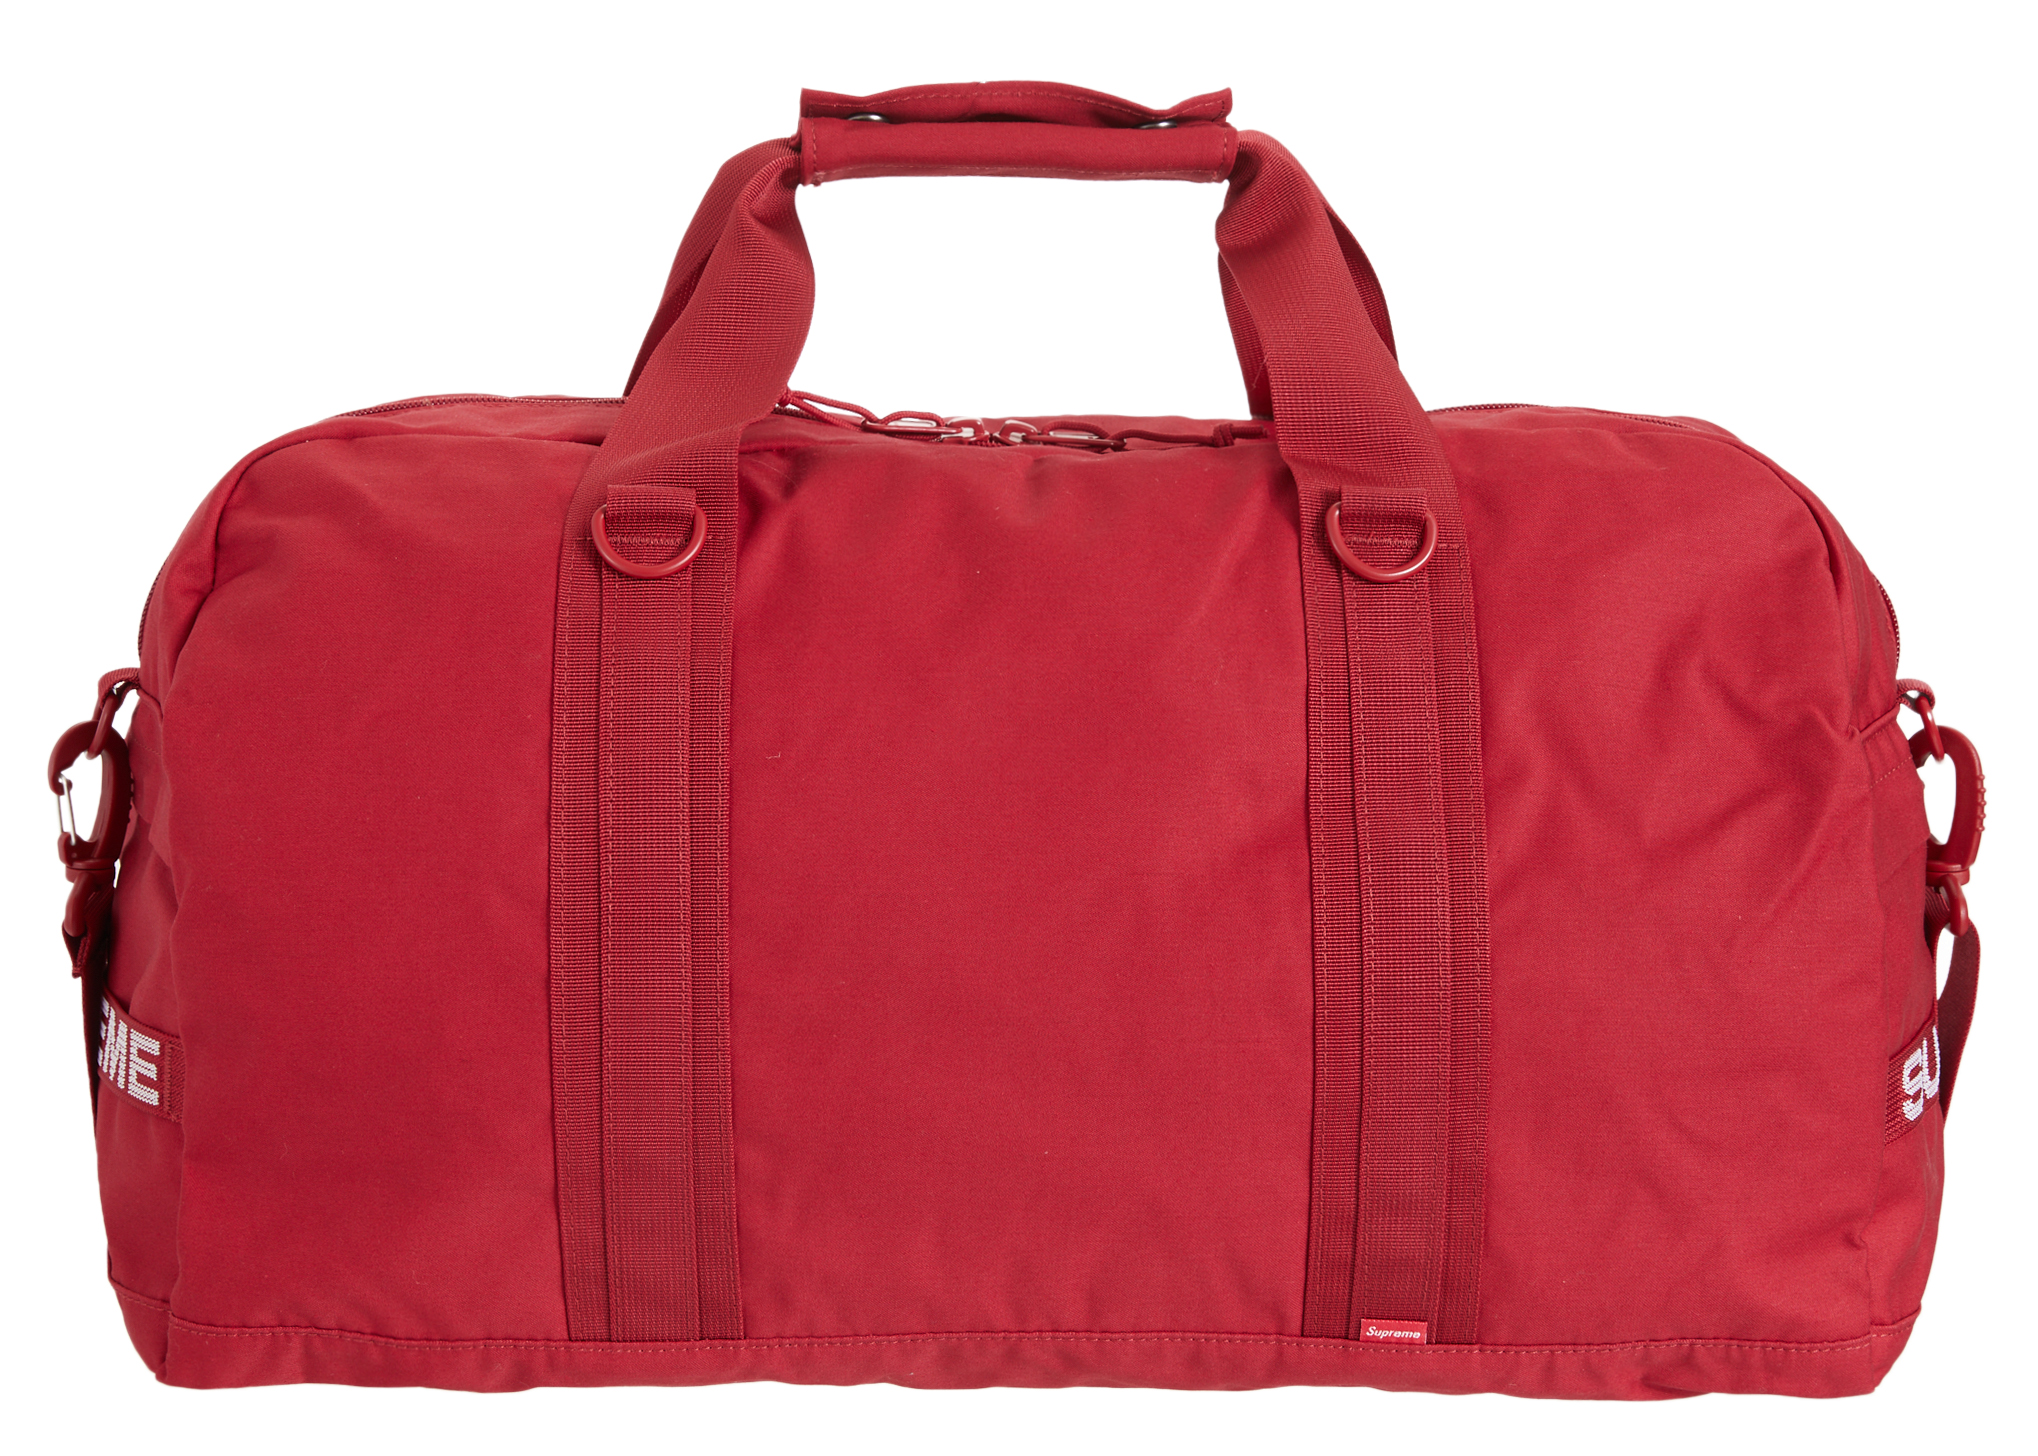 Supreme Field Duffle Bag Red